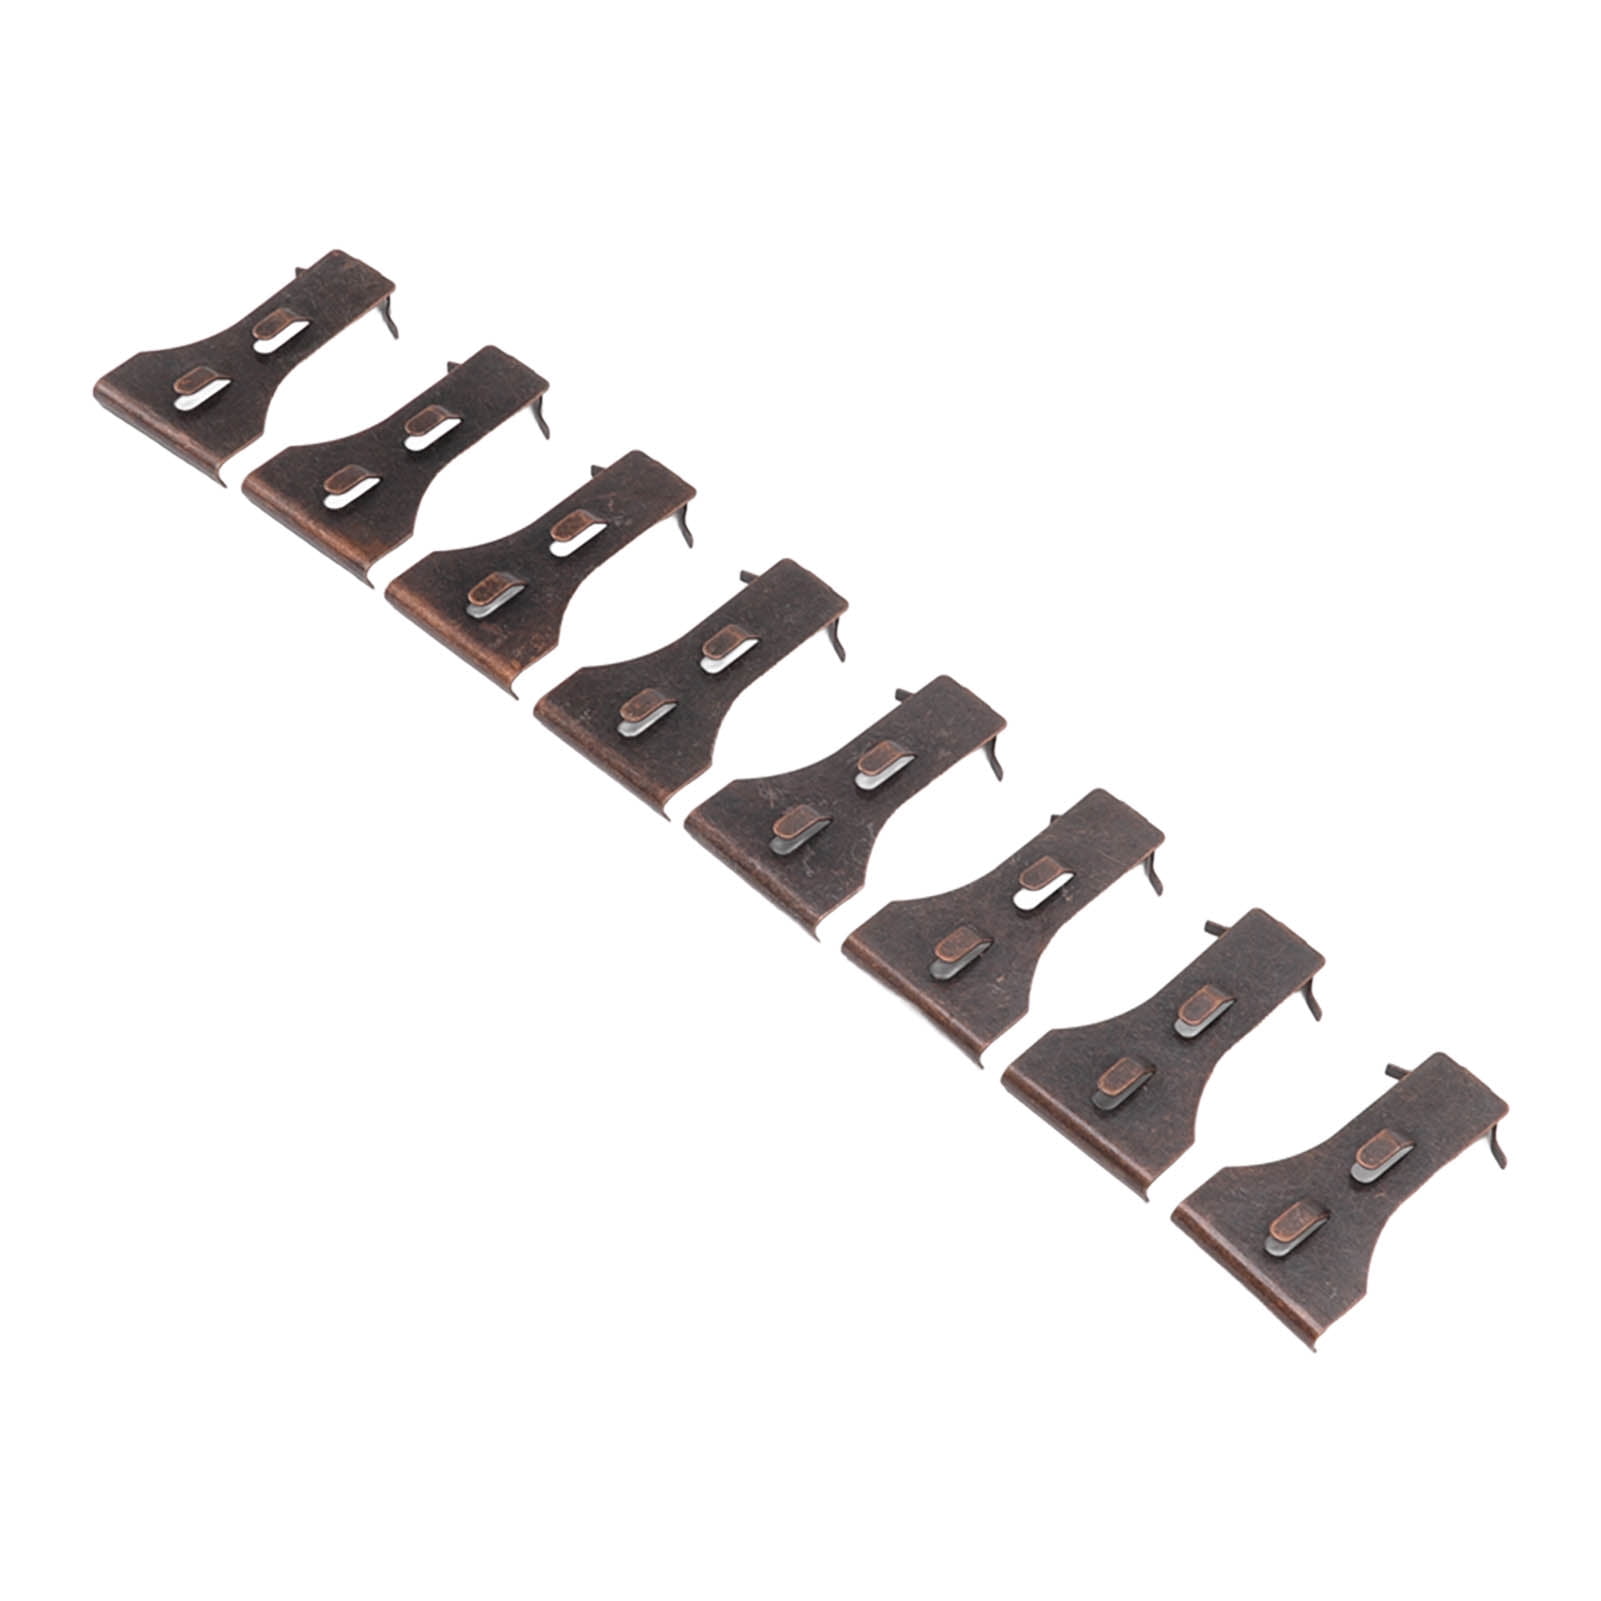 10 pcs Heavy Duty Brick Hooks Hanger Clips Standard Wall Clip Decor 